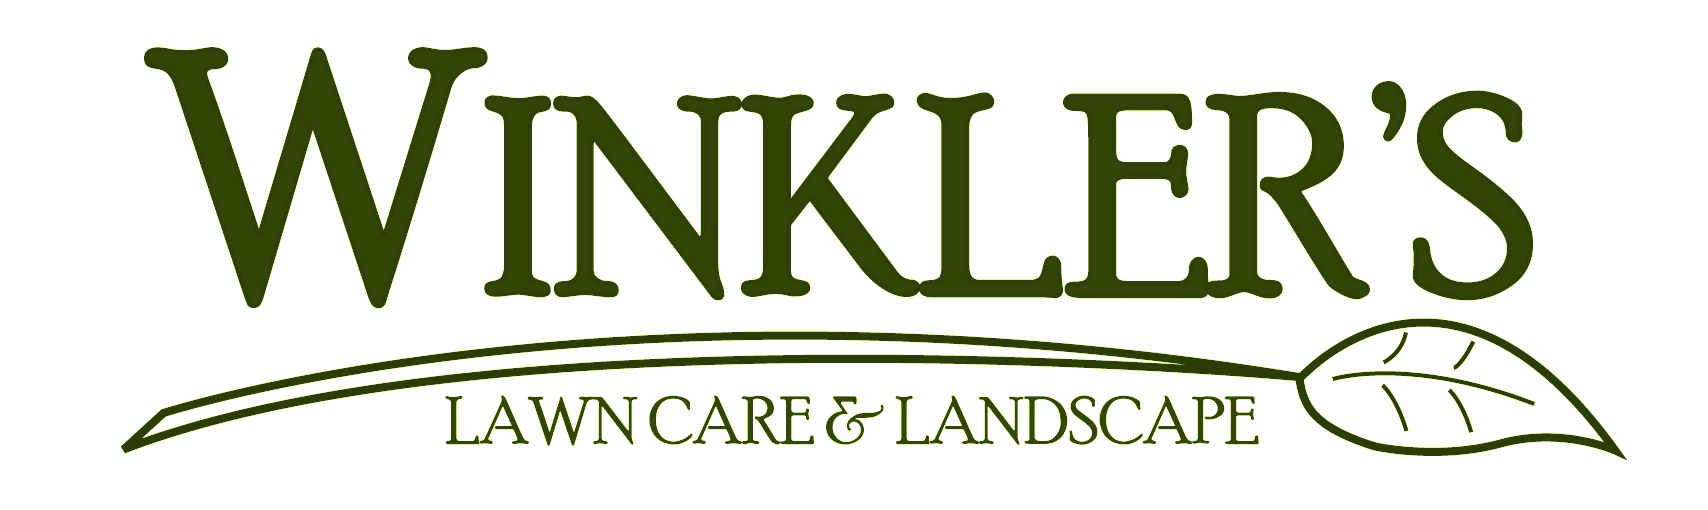 Winkler's Lawn Care & Landscape Logo